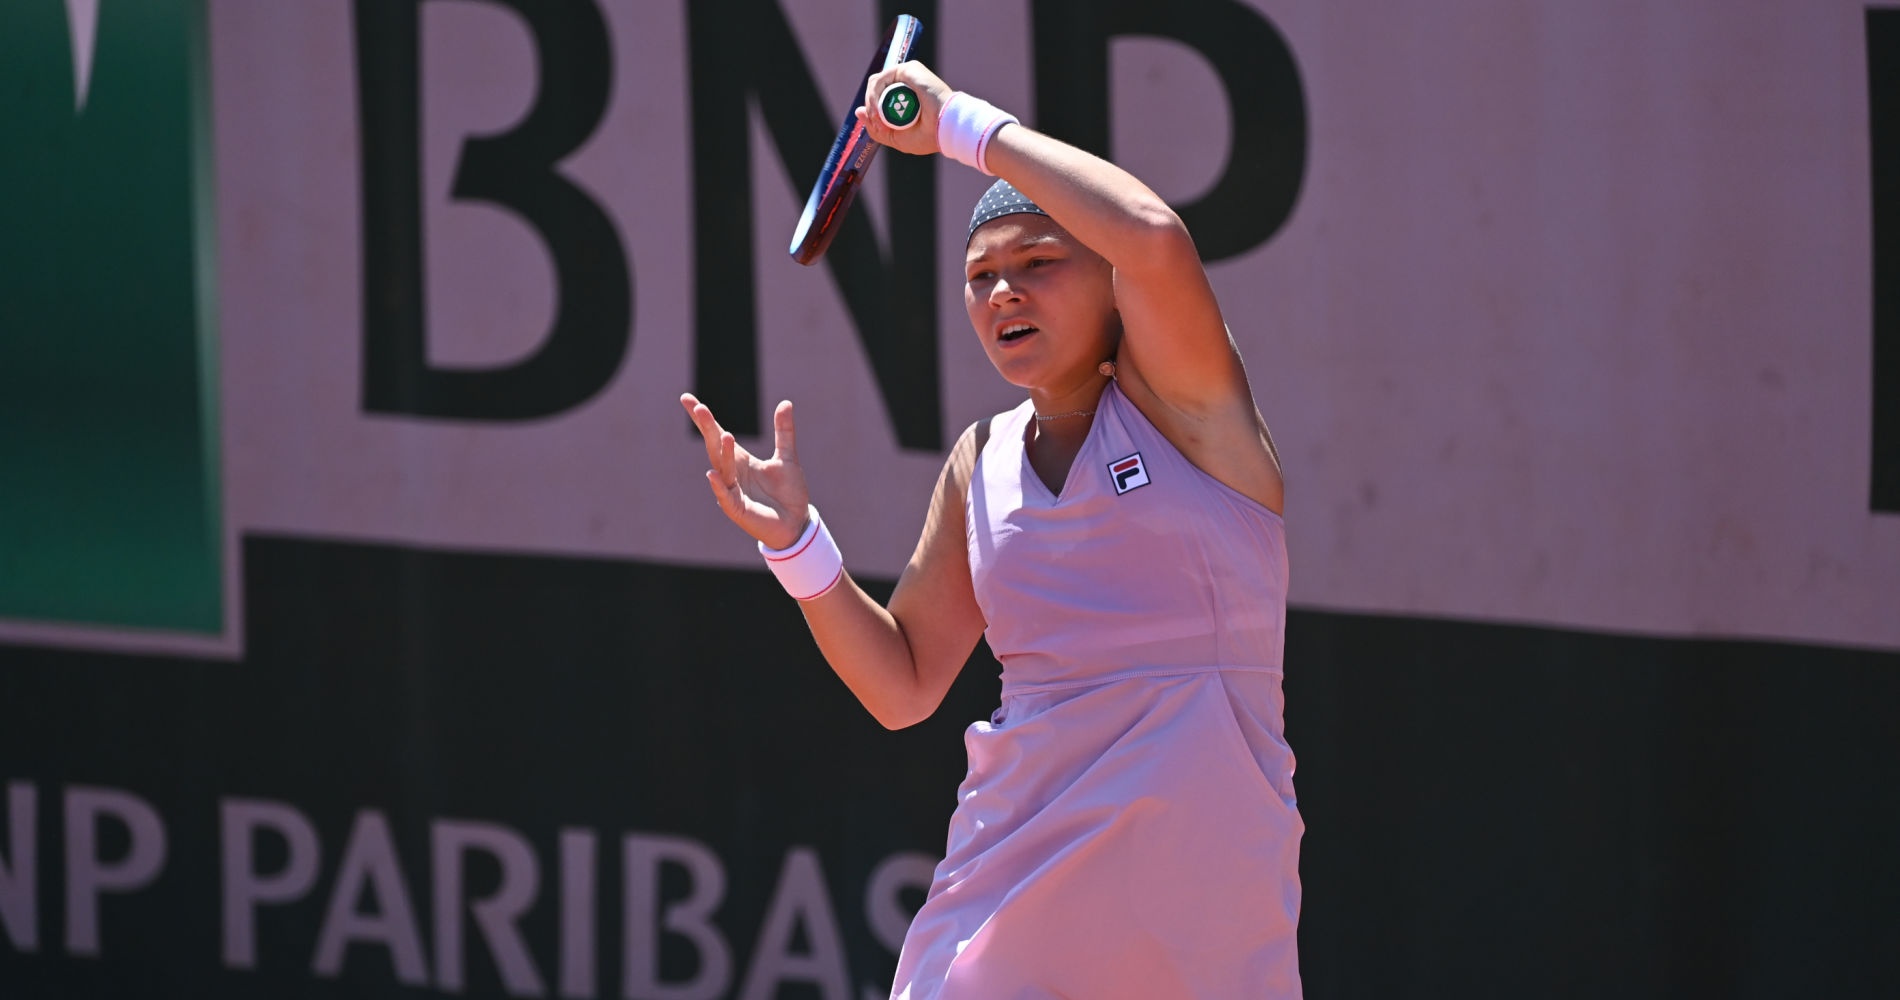 18-year-old Dana Shnaider wins at Australian Open